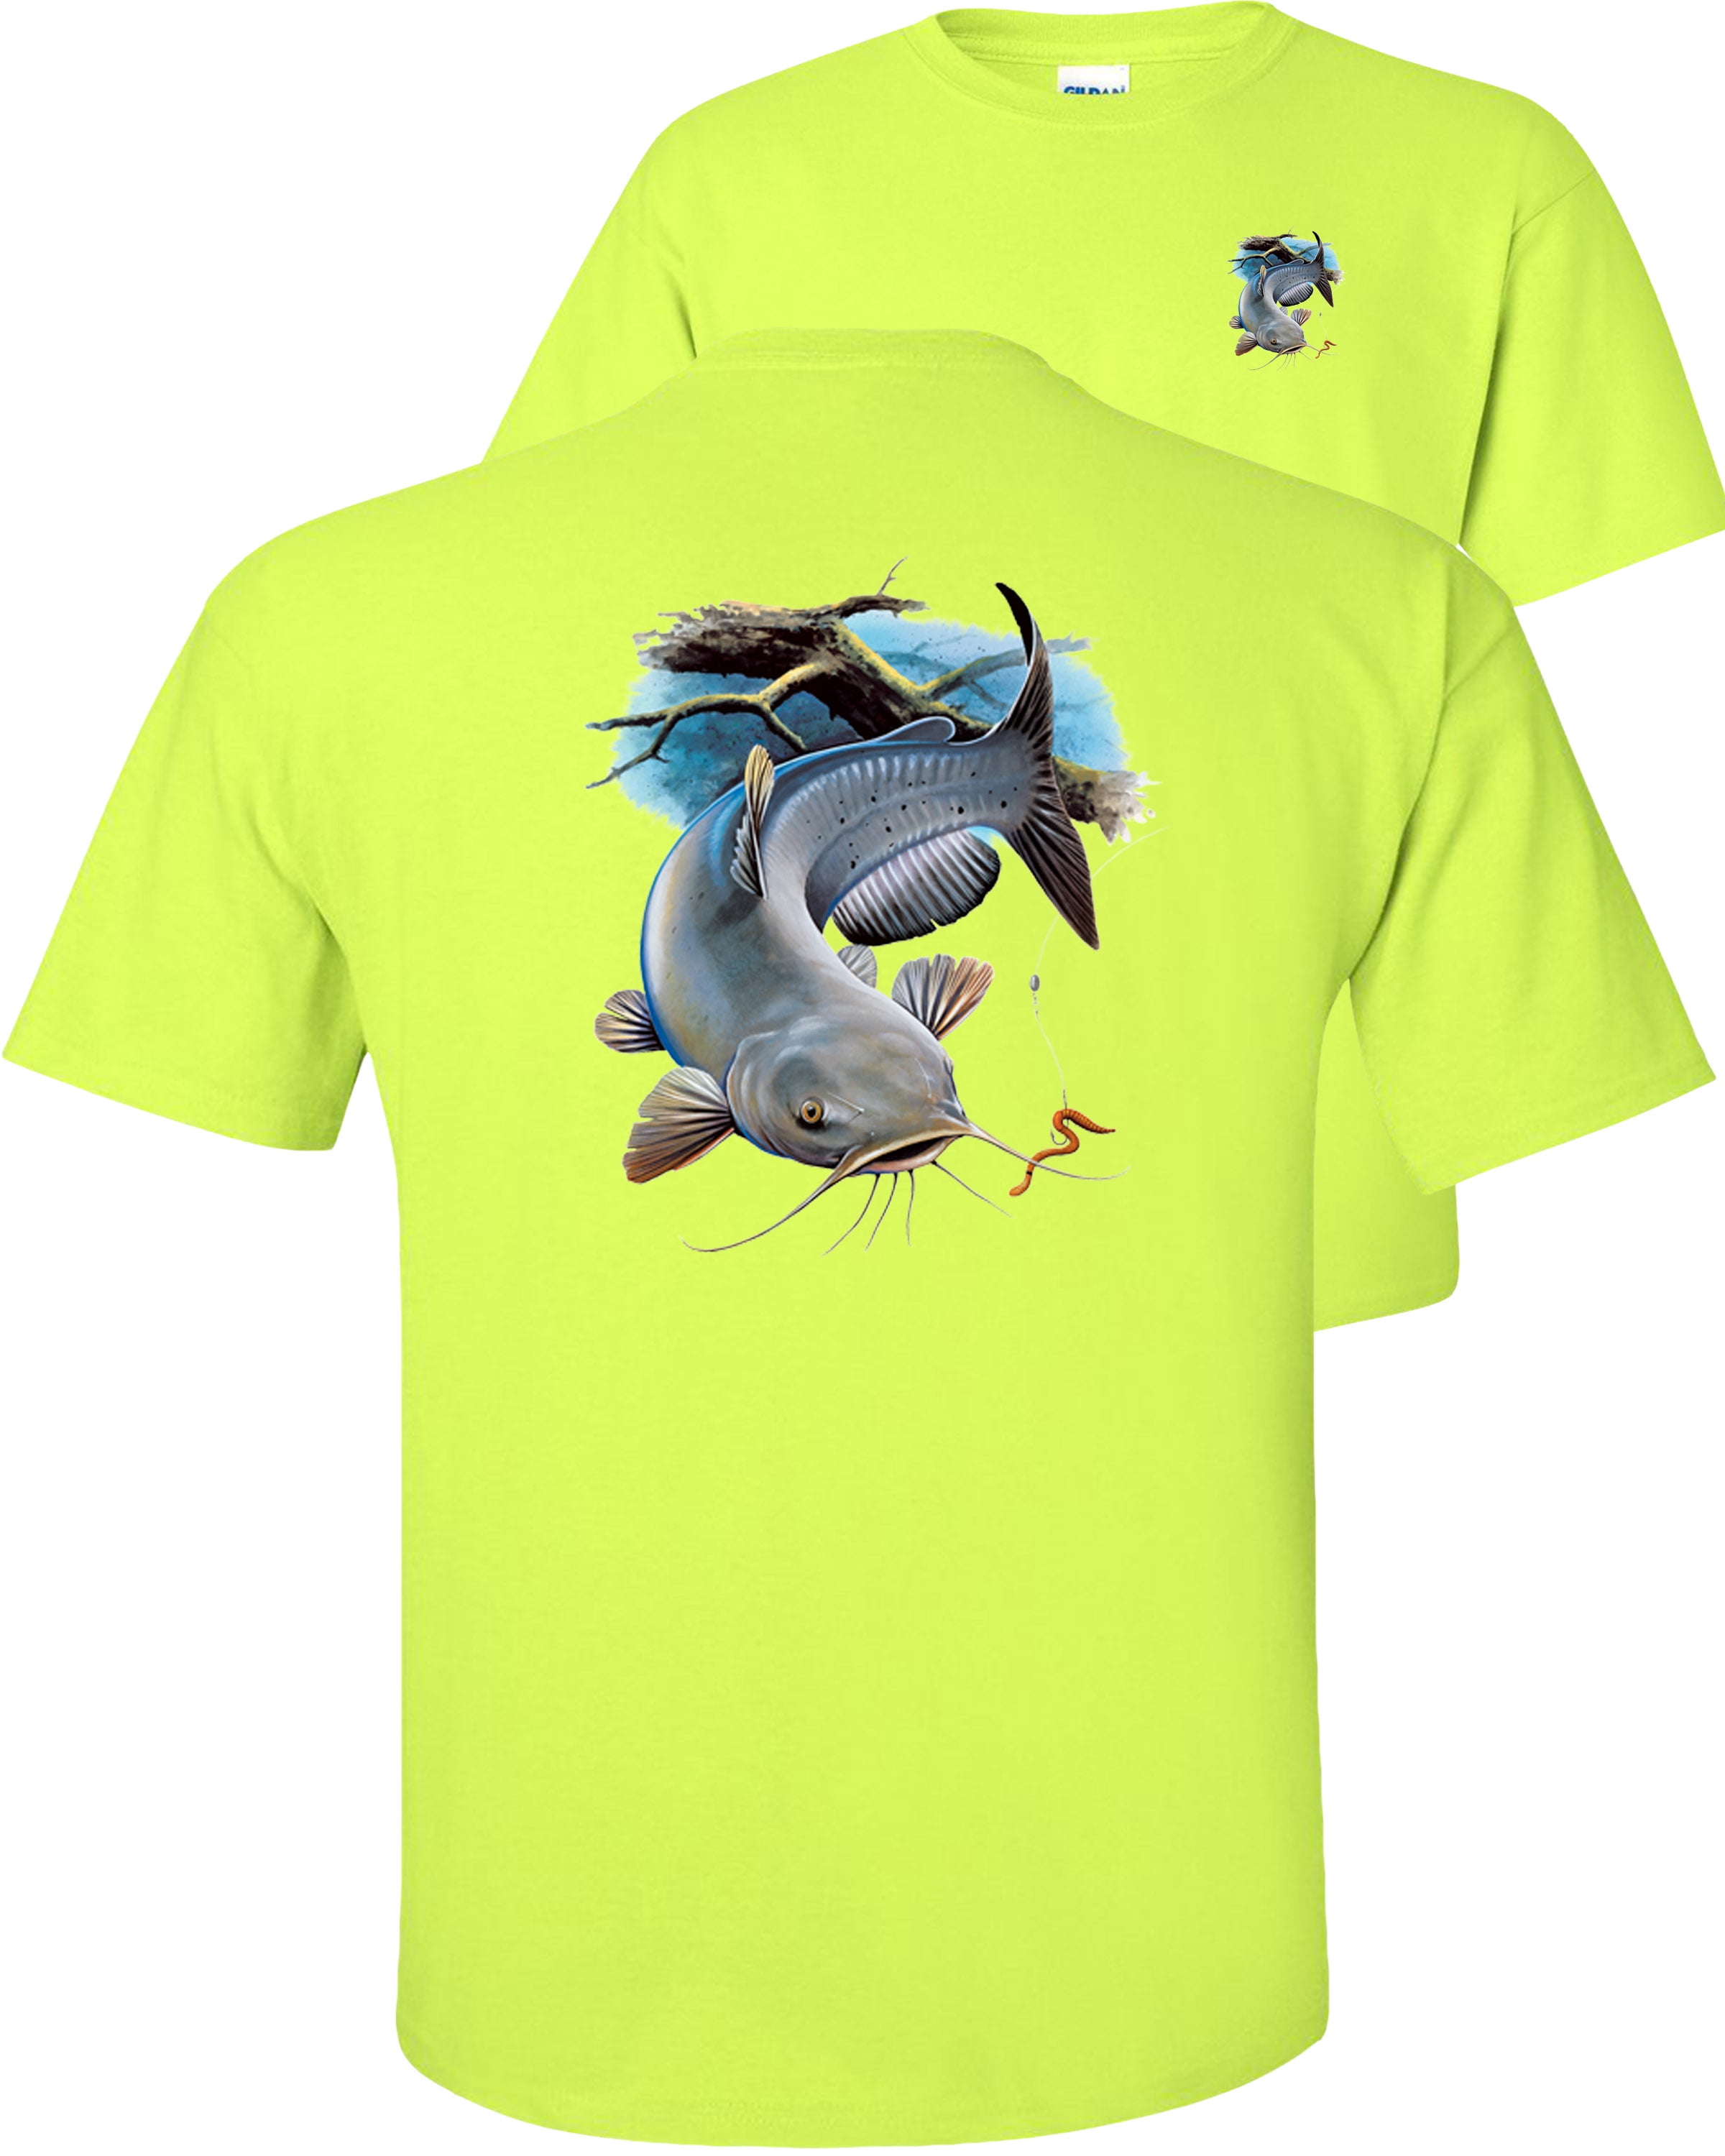 Fair Game Catfish T-Shirt, River Blue Channel, Fishing Graphic Tee-White-XL